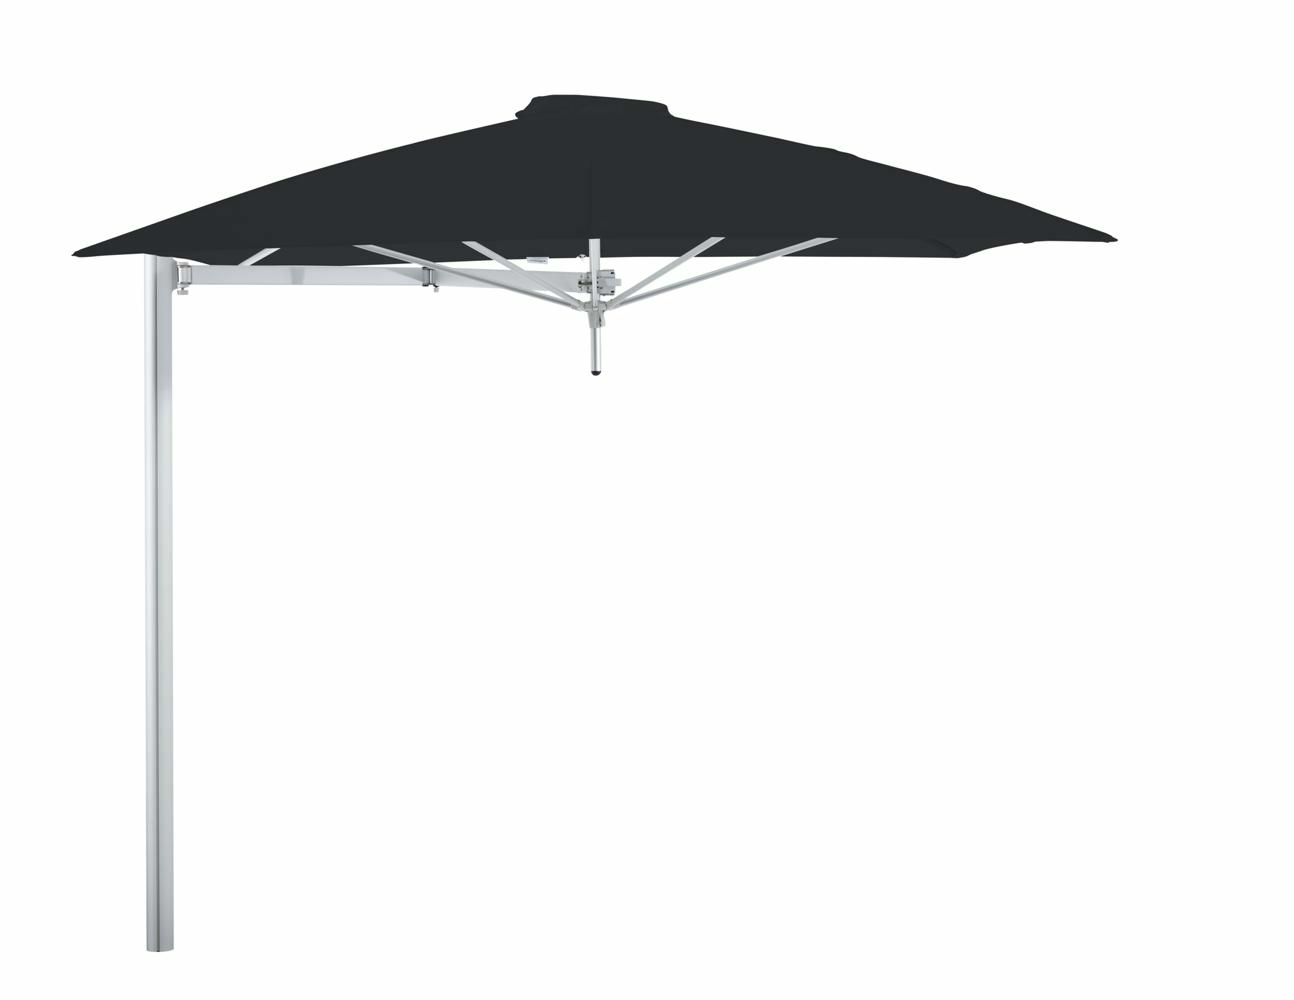 Paraflex cantilever umbrella square 2,3 m with Black fabric and a Neo arm